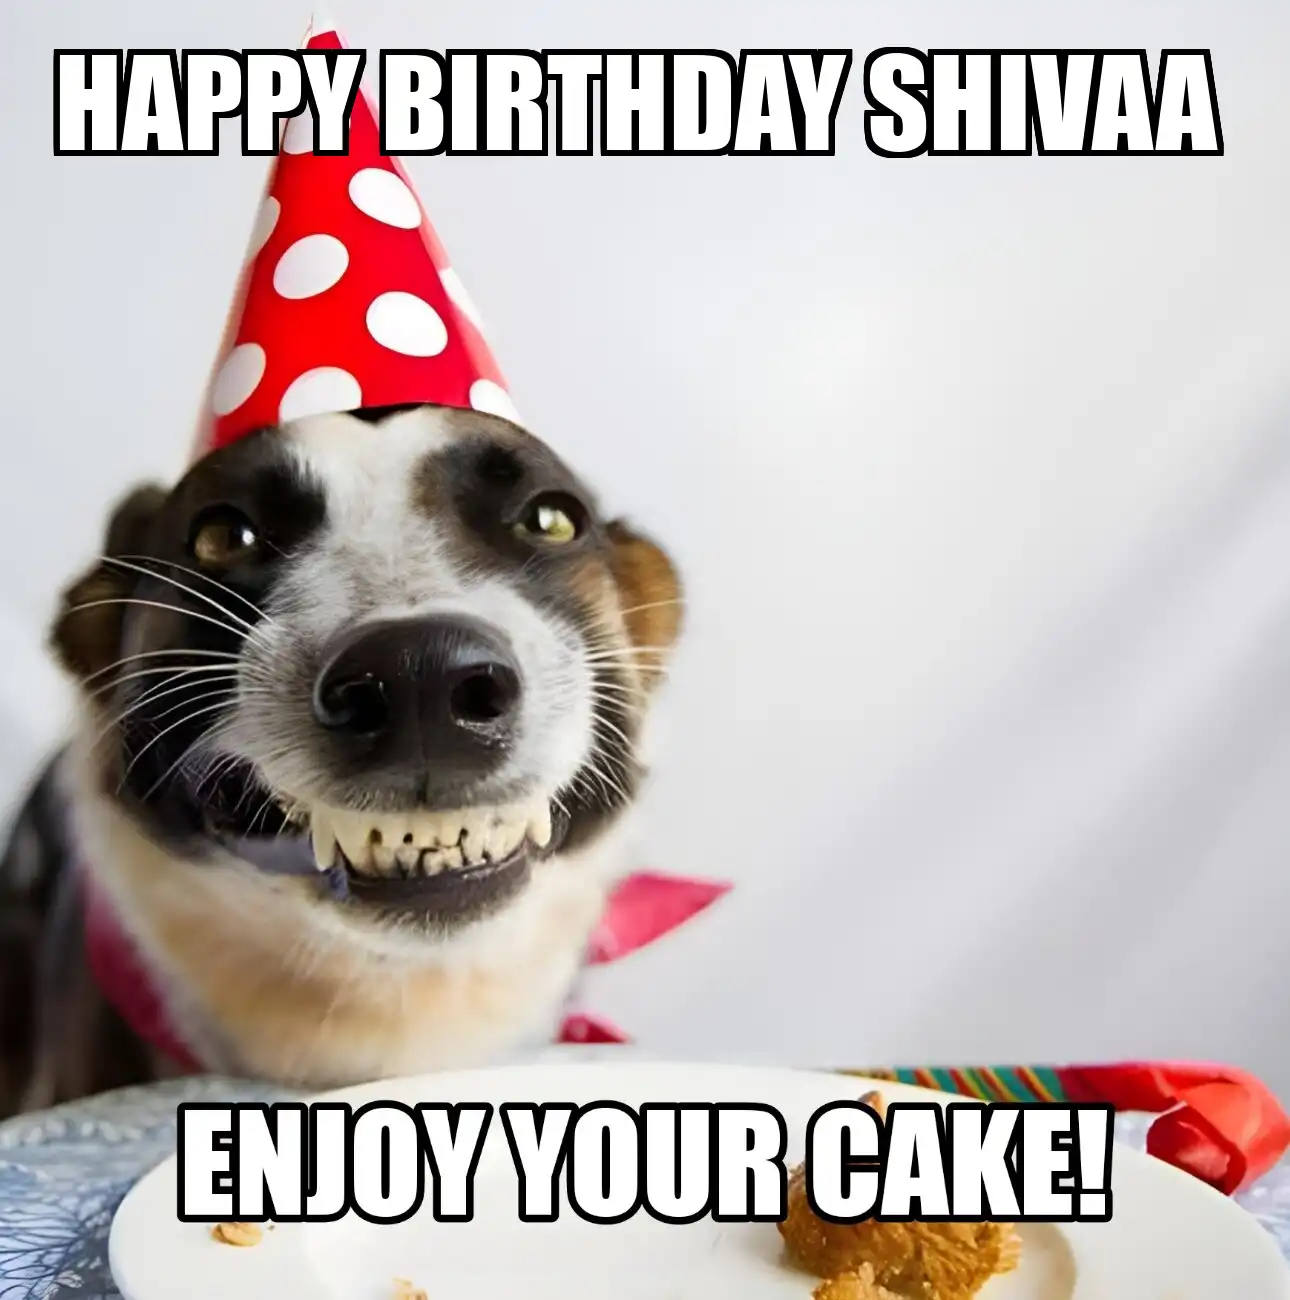 Happy Birthday Shivaa Enjoy Your Cake Dog Meme